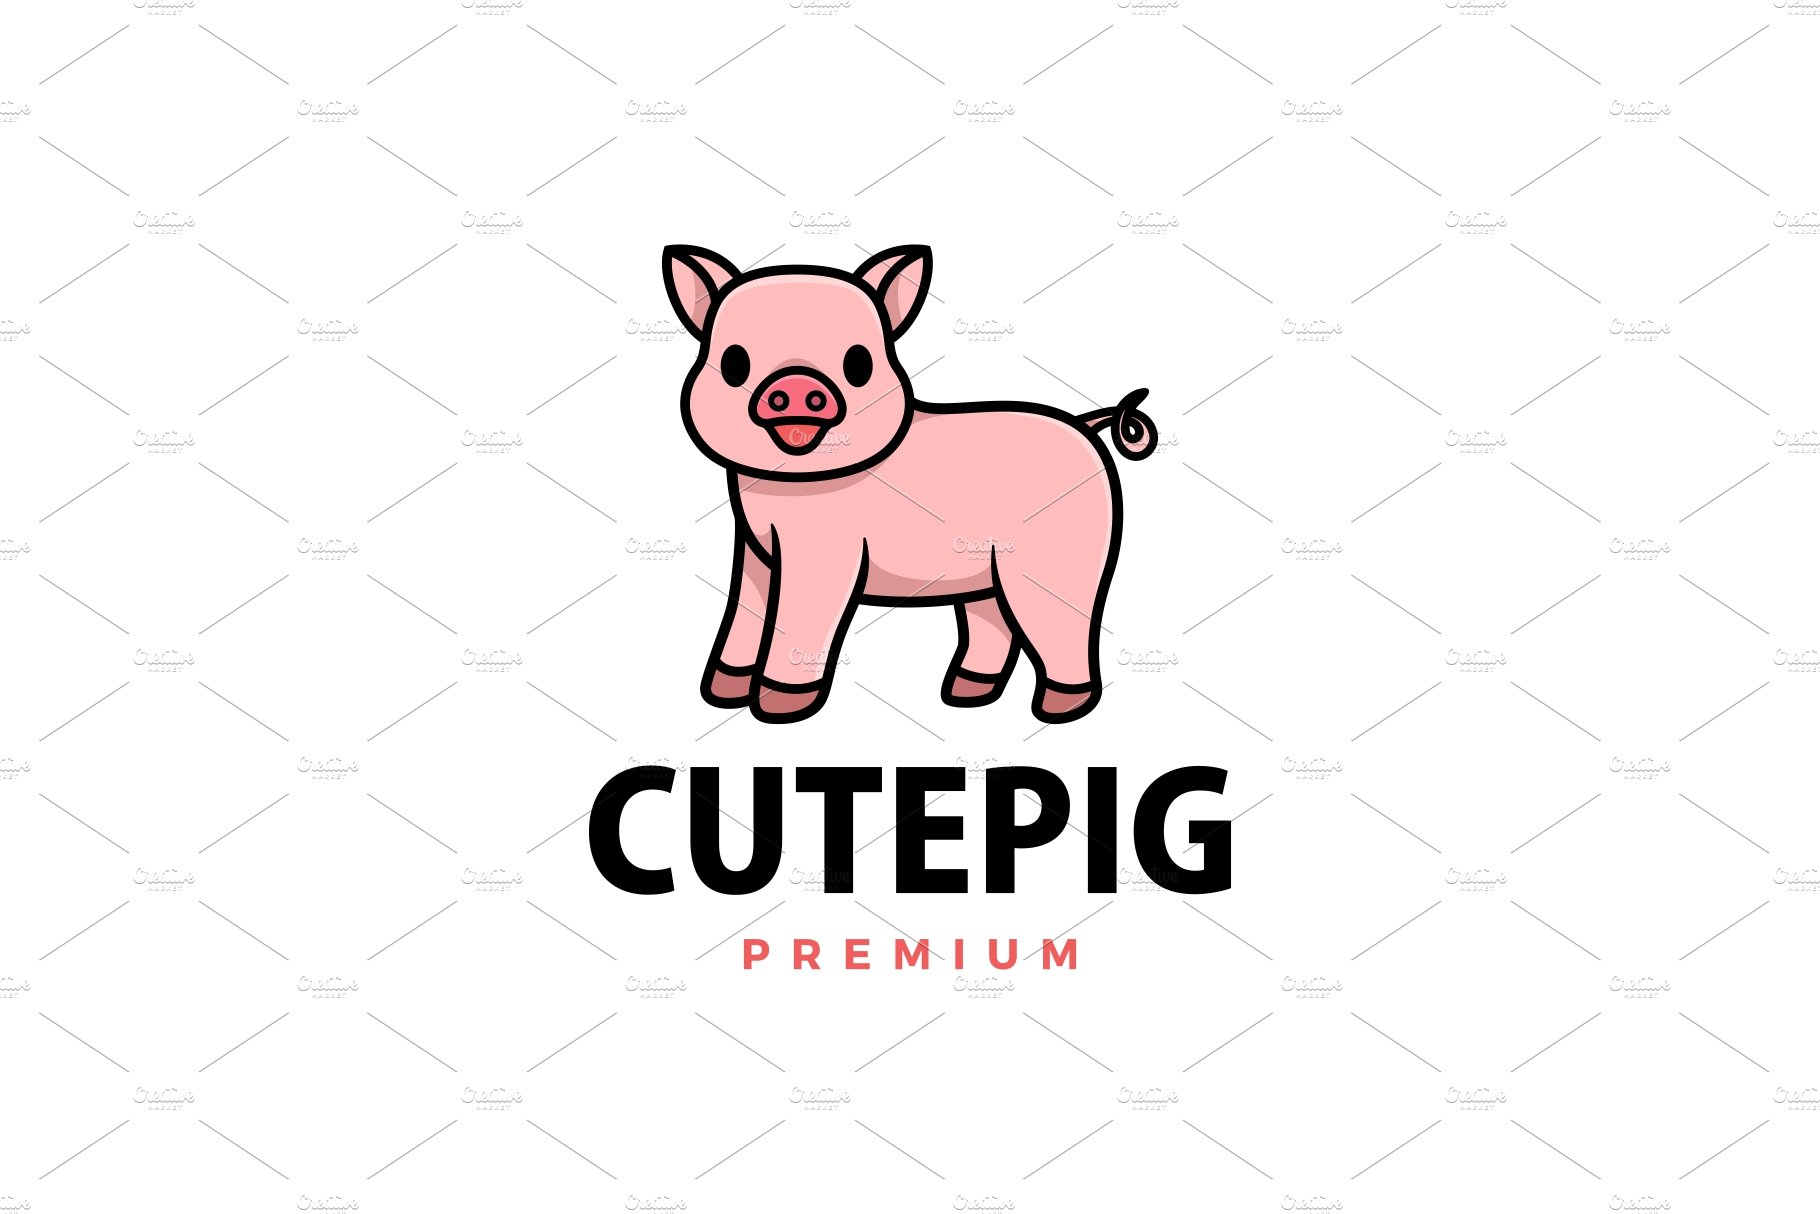 cute pig cartoon logo vector icon cover image.